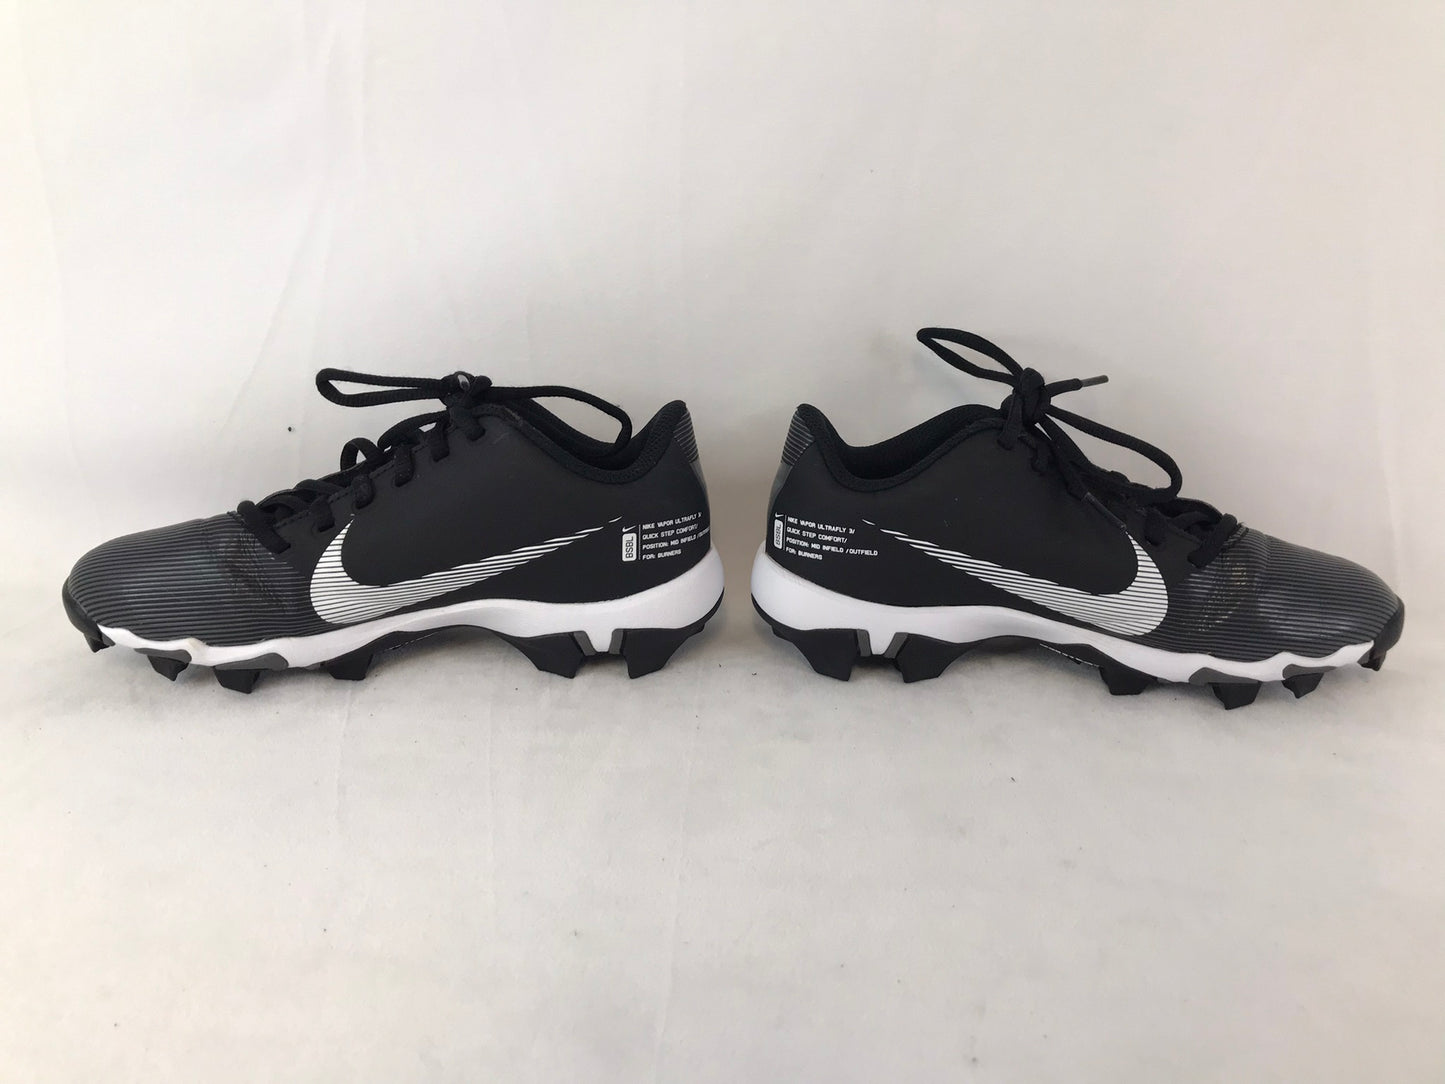 Baseball Shoes Cleats Child Size 4 Nike Vapor Black White As New